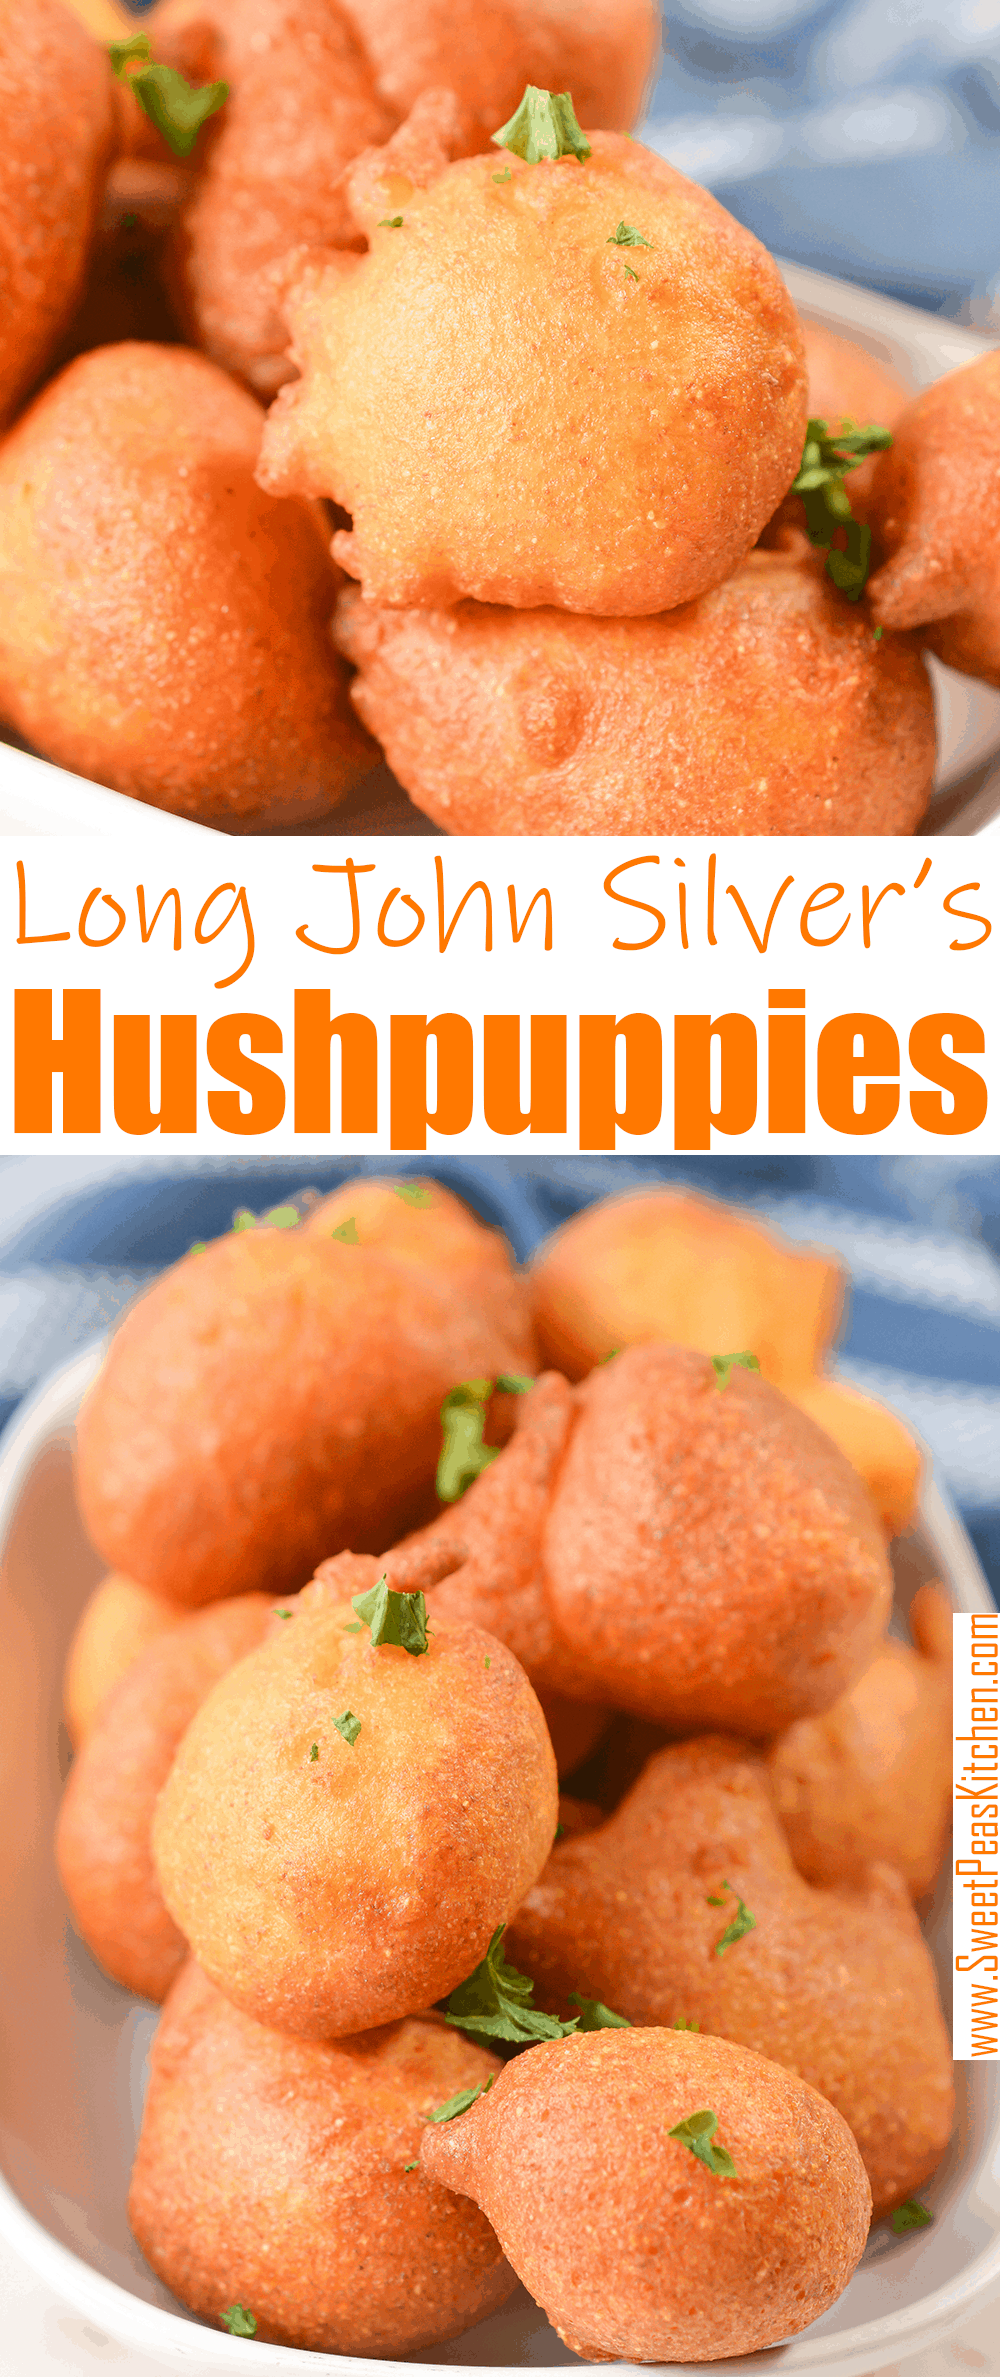 Long John Silver's Hushpuppies